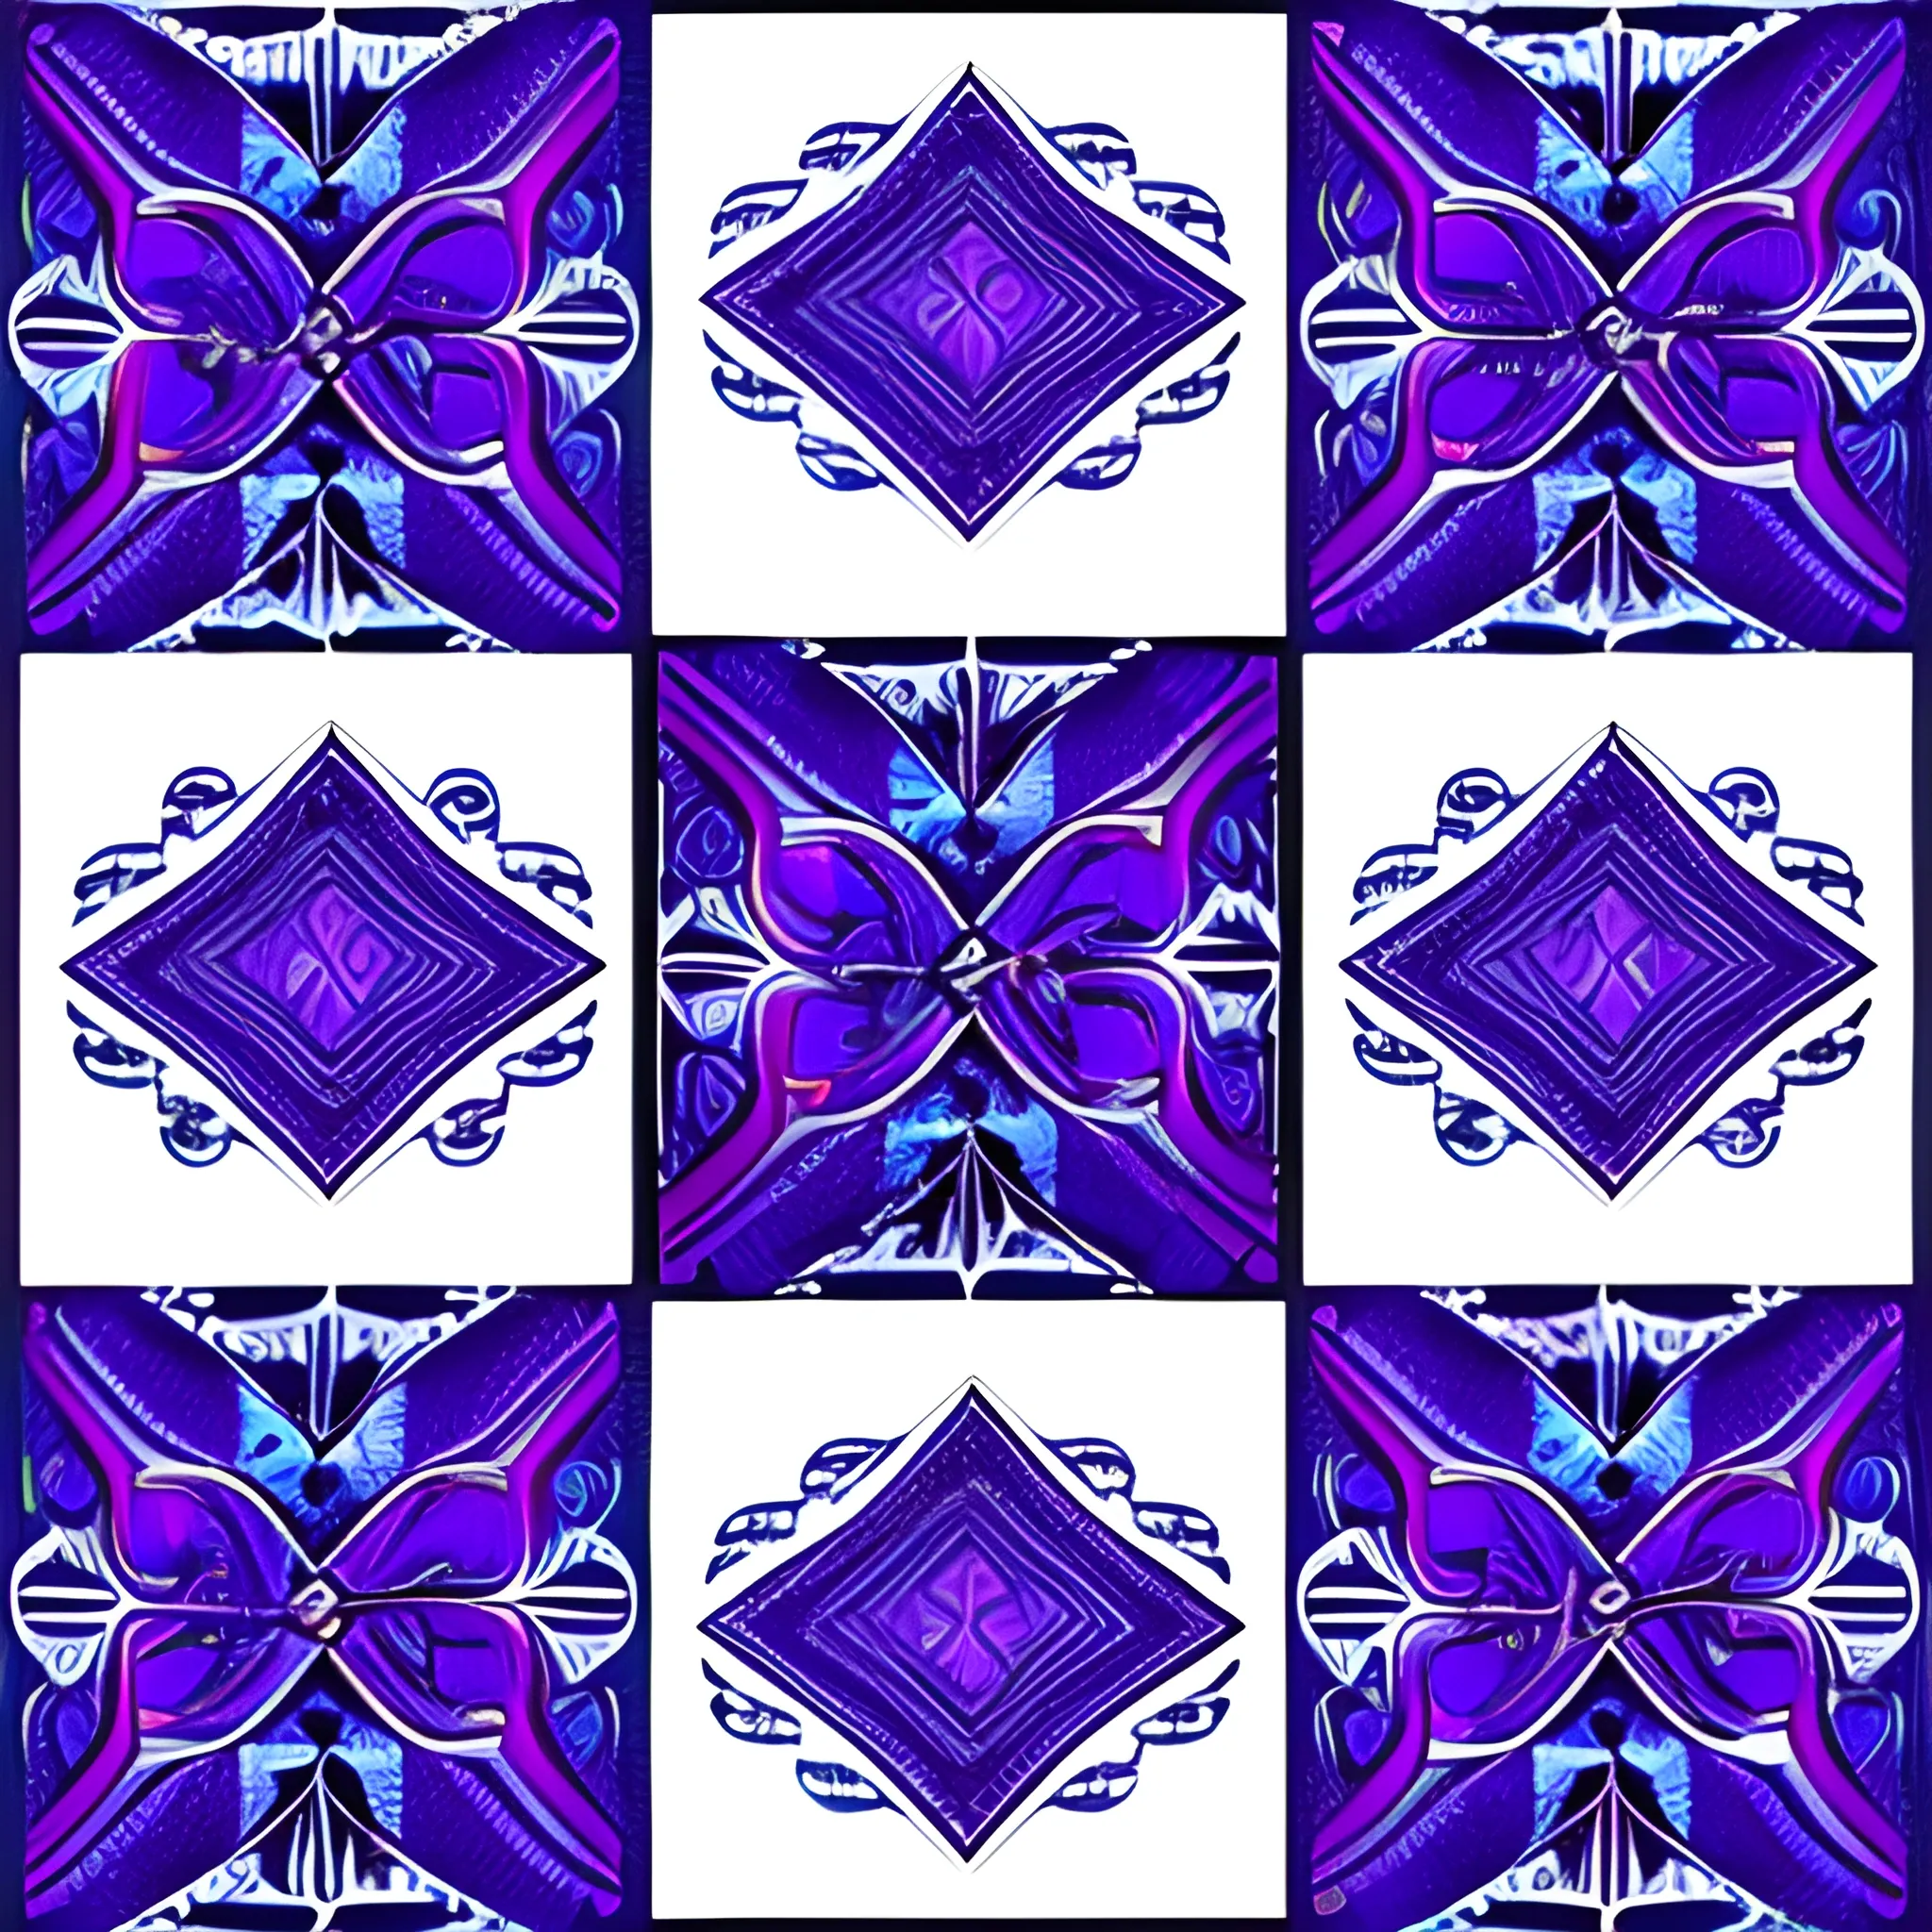 weft irate motif designs blue purple colour, abstract designs, bigger motifs, unique abstract design.

creative, new, innovative